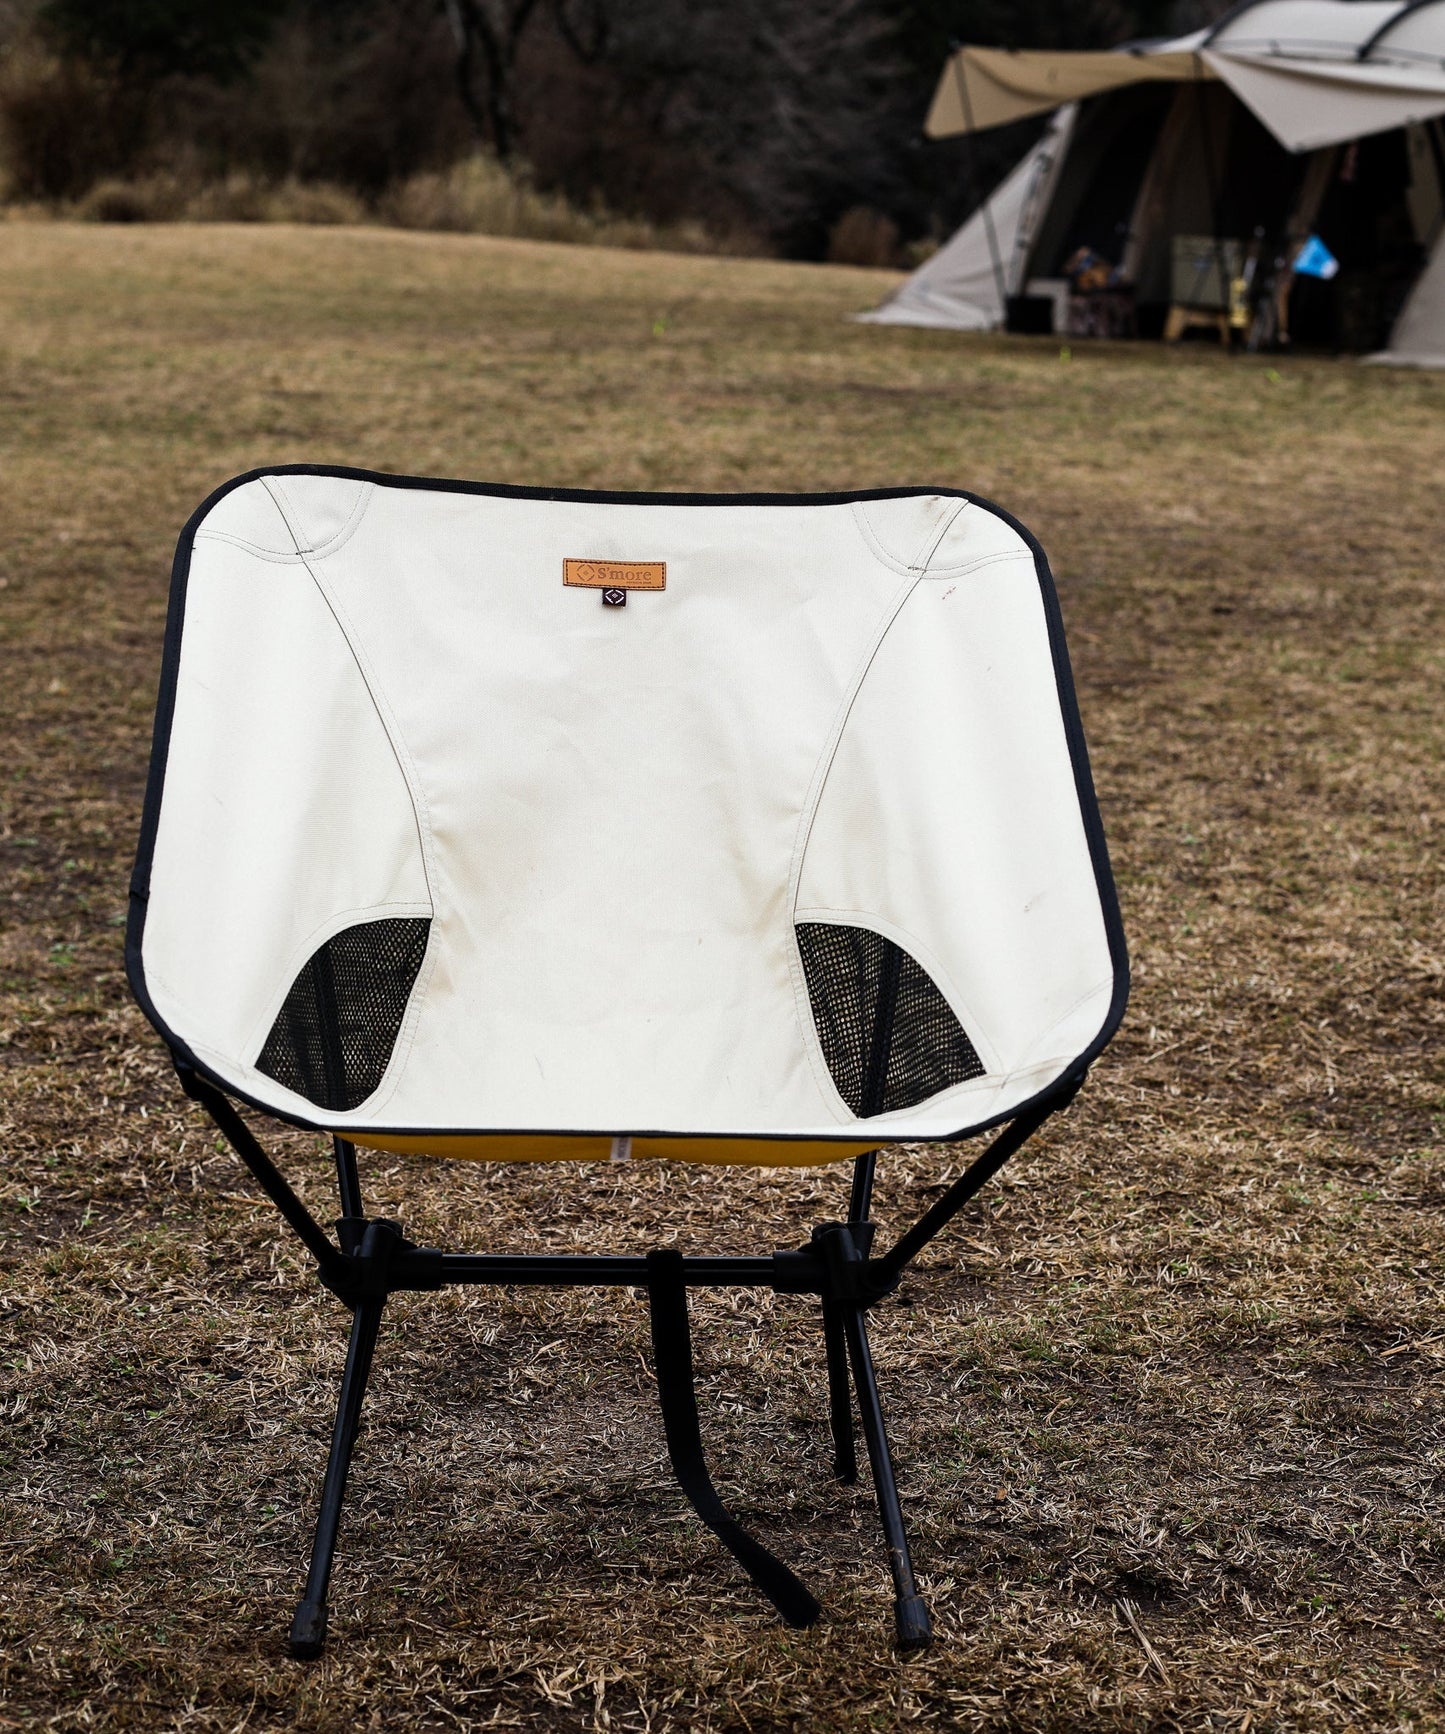 S'more-Alumi-Low-back 輕量折疊低背戶外露營椅圖片